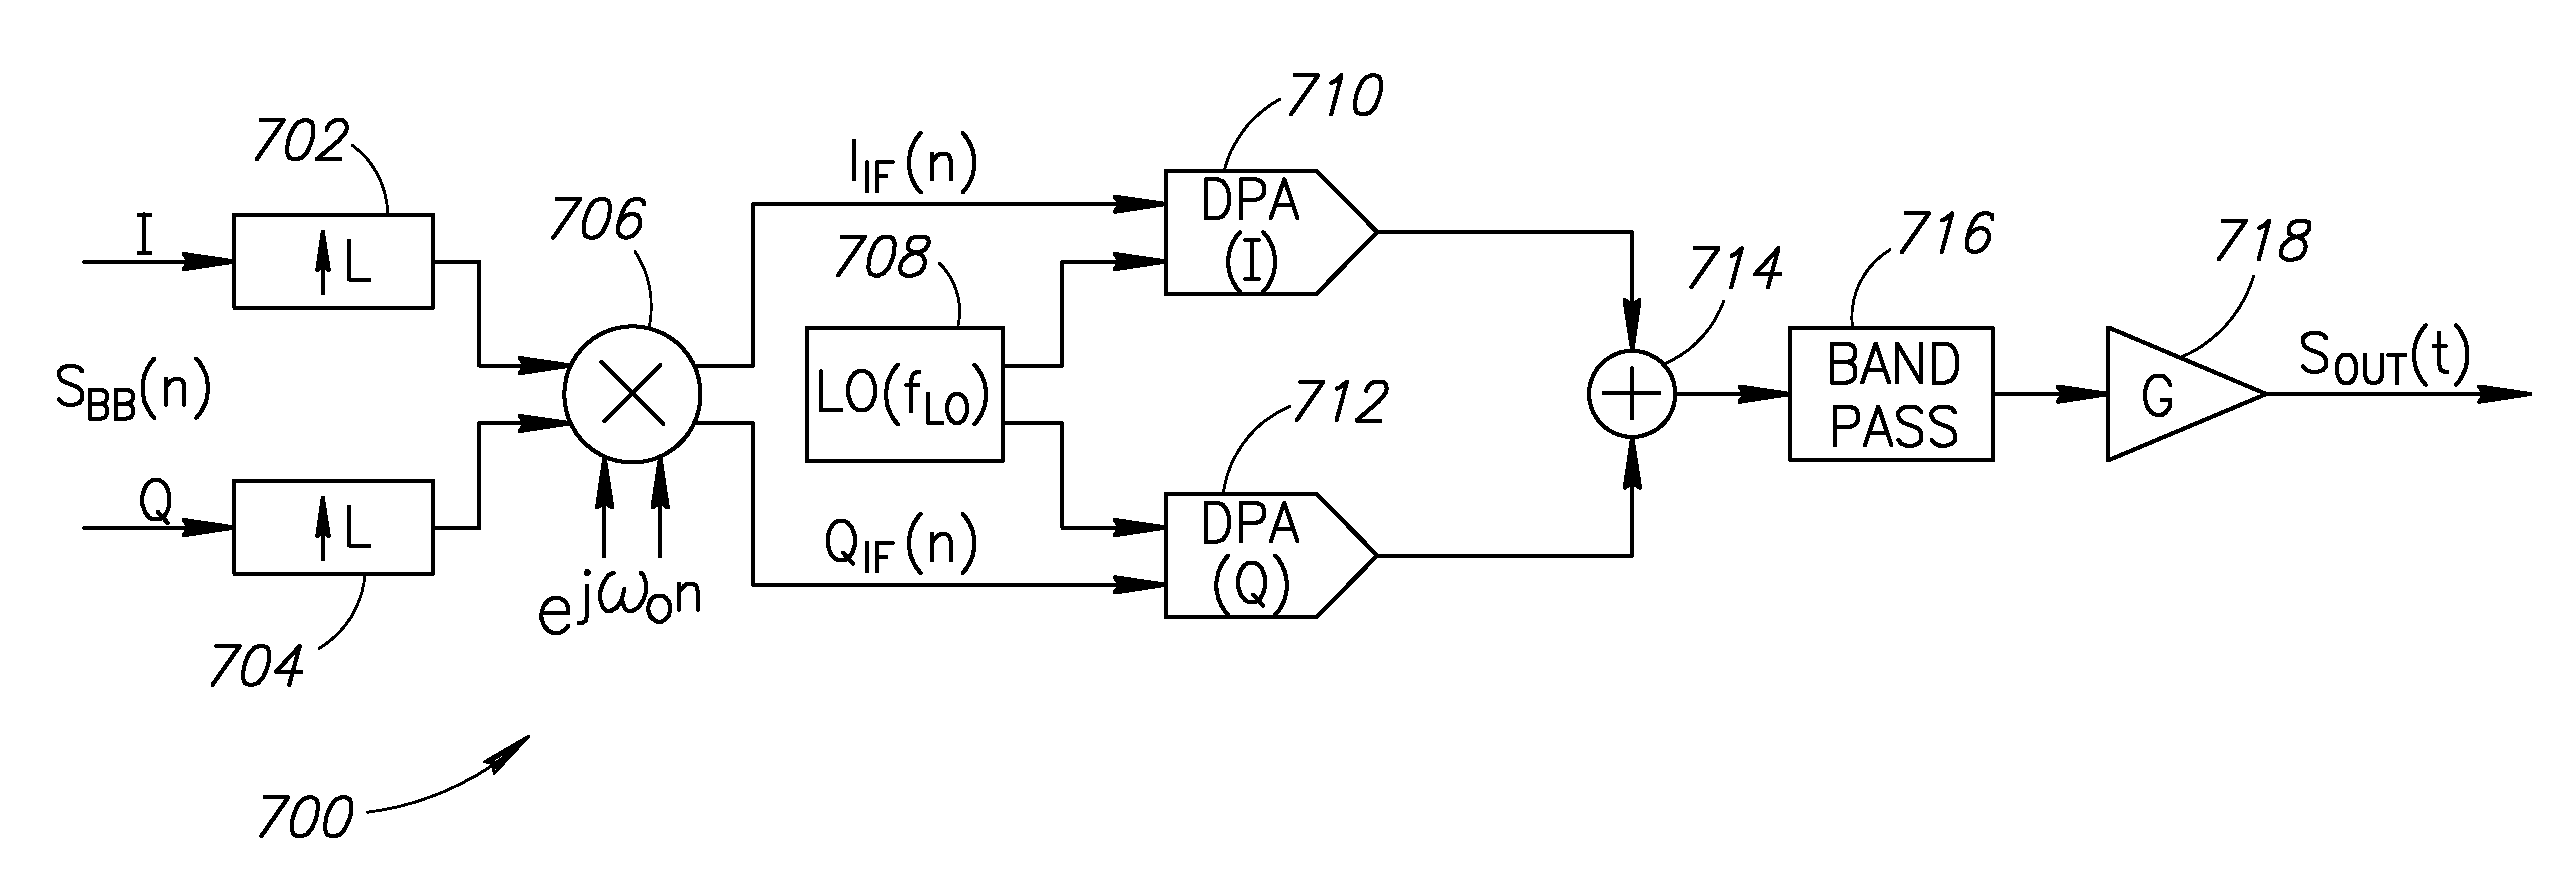 Local oscillator with non-harmonic ratio between oscillator and RF frequencies using wideband modulation spectral replicas